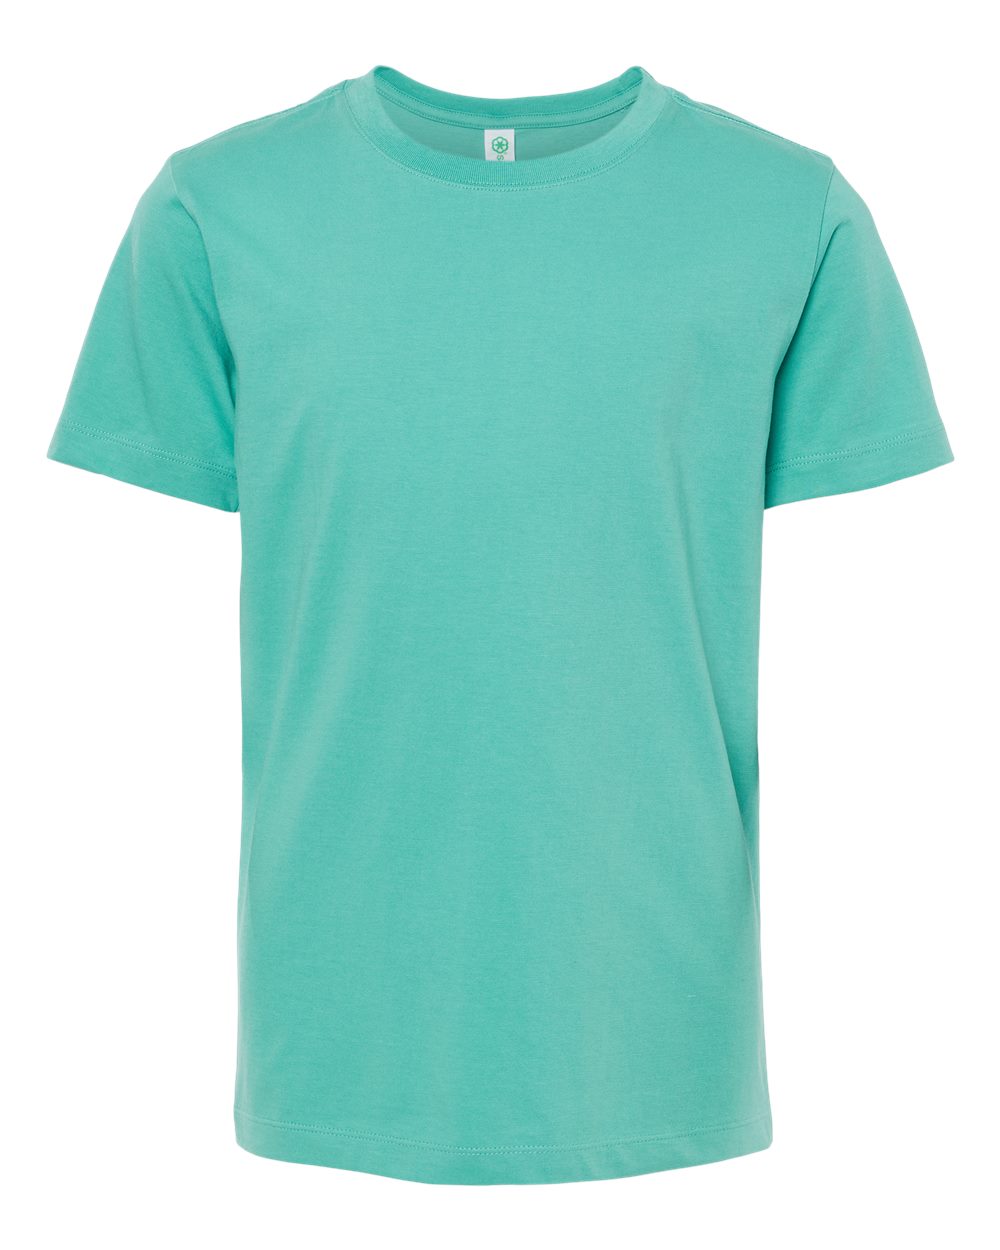 Softshirts® Youth Organic Cotton T-shirt in seafoam